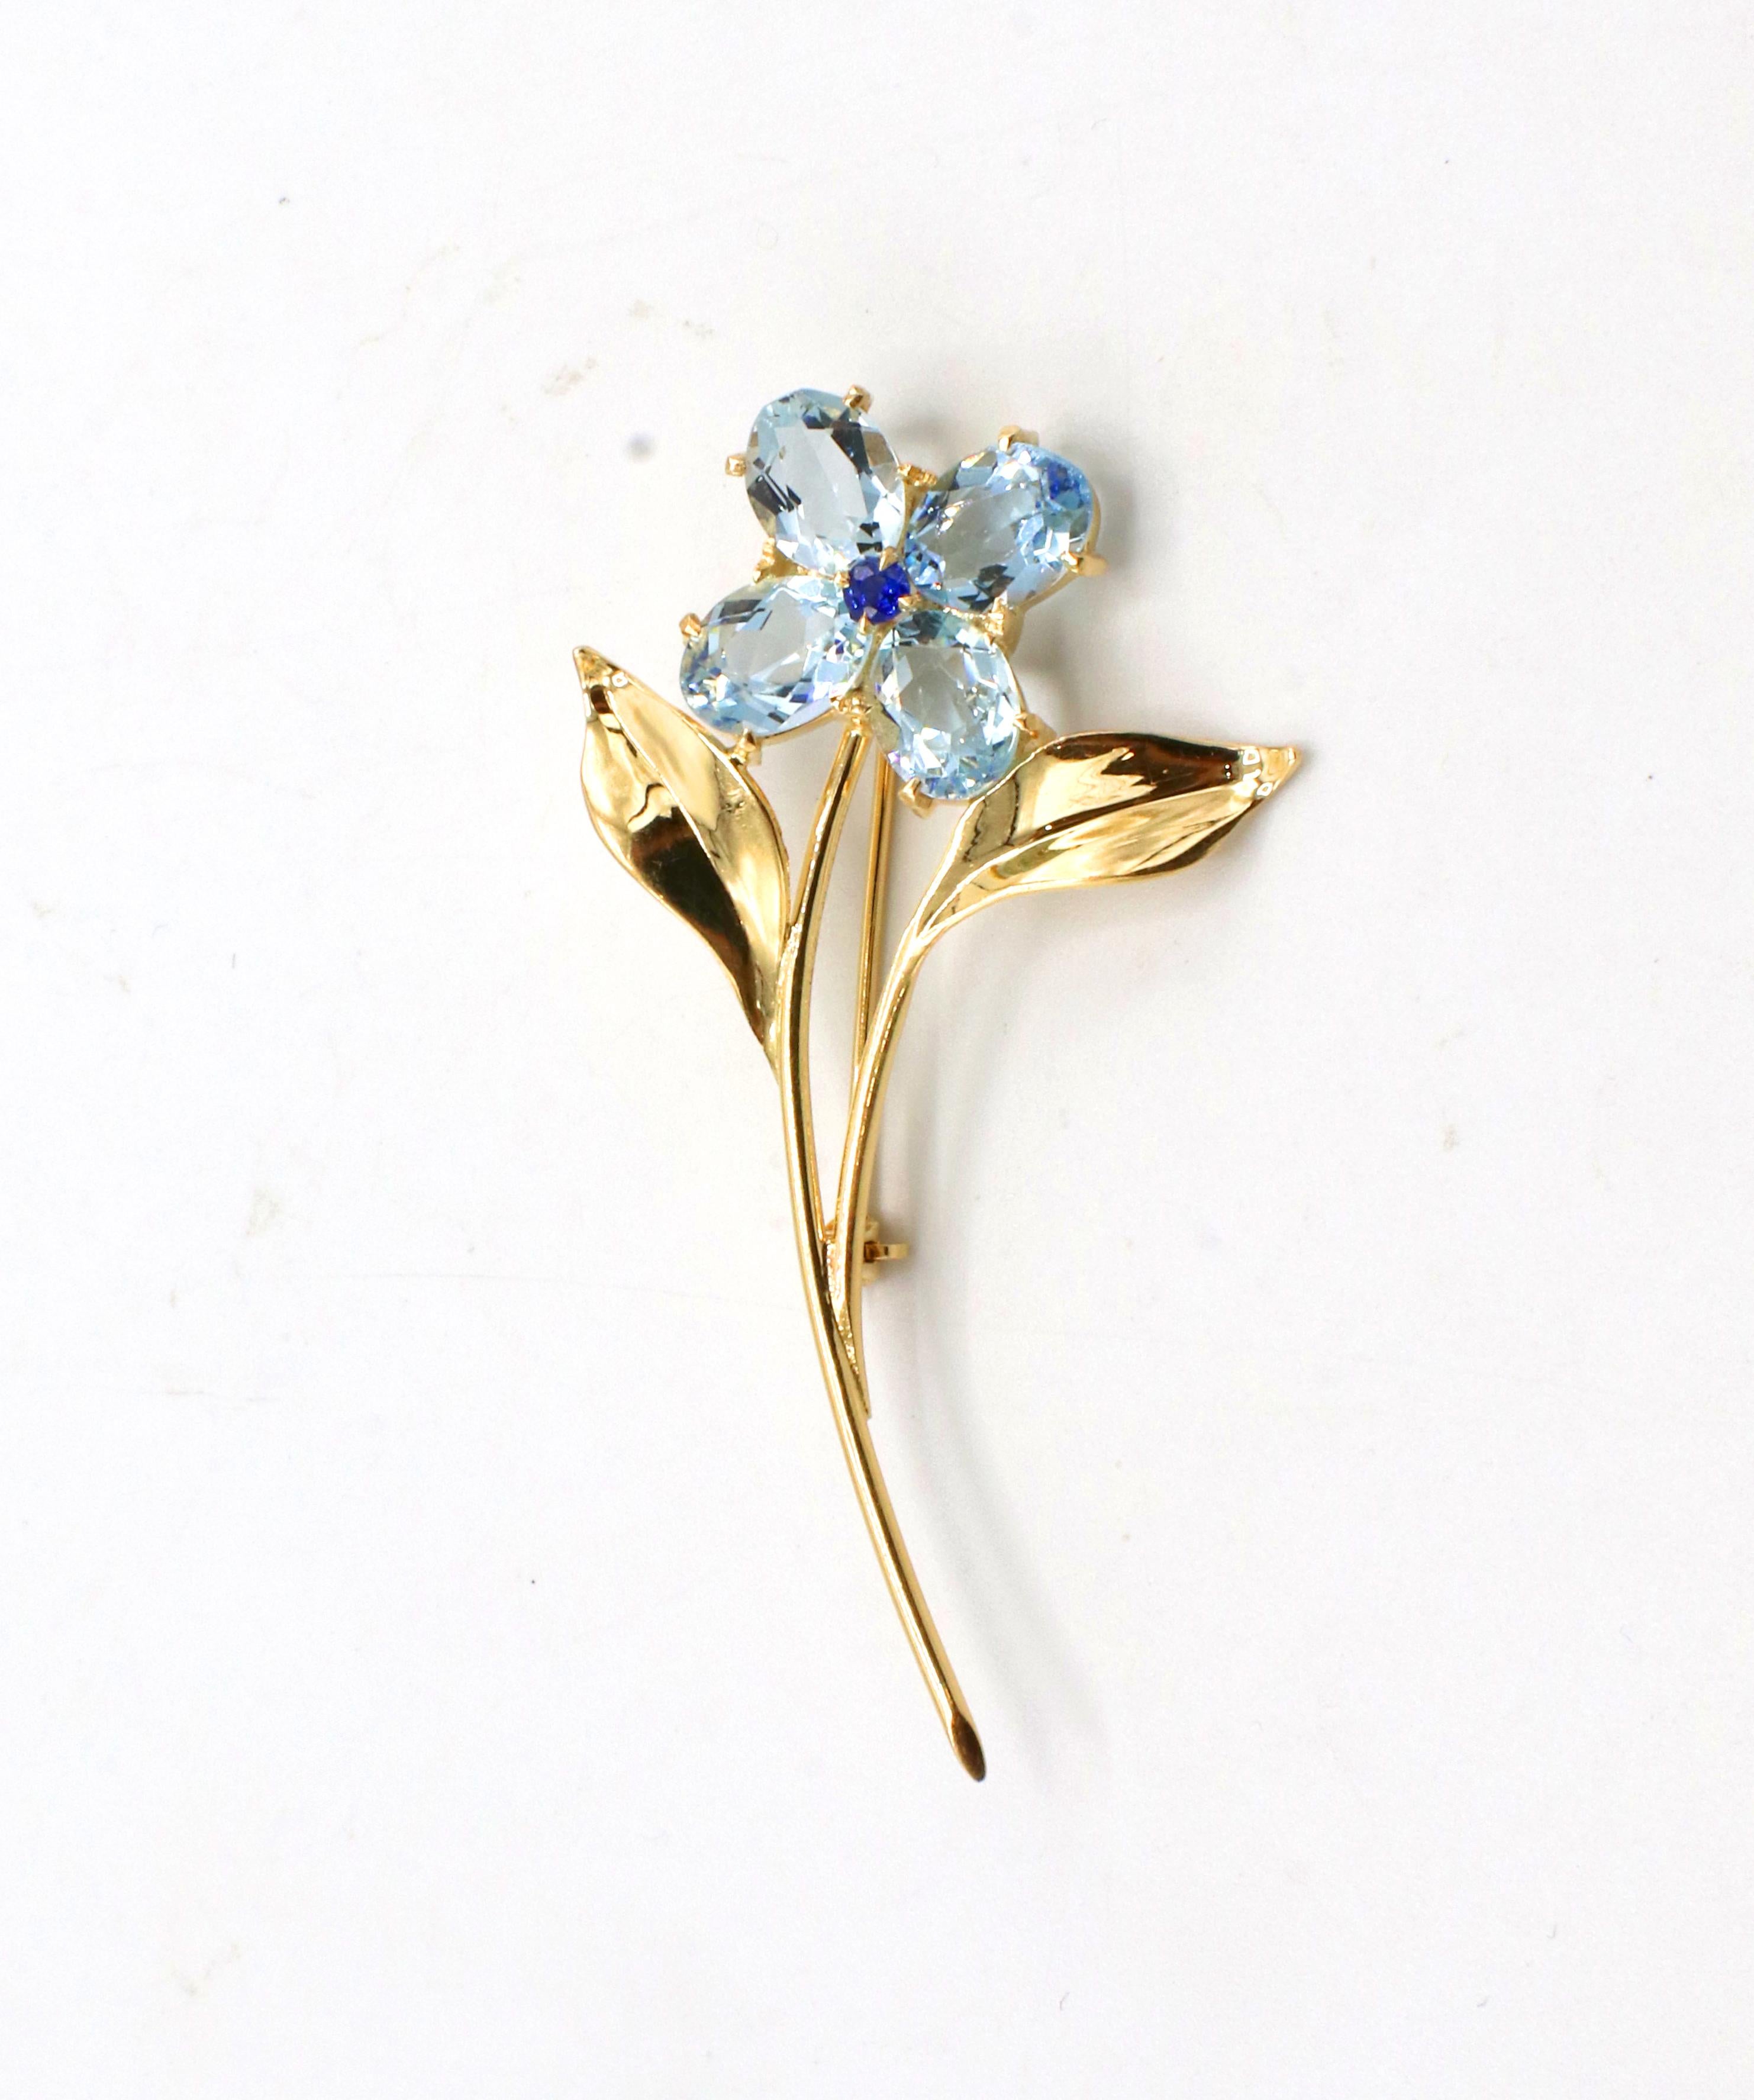 Retro Tiffany & Co. 14 Karat Gold Aquamarina & Sapphire Flower Brooch Pin 
Metal: 14k yellow gold
Weight: 5.03 grams
Length: 55.5mm
Width: 29.5mmm
Signed: Tiffany & Co. 14K
